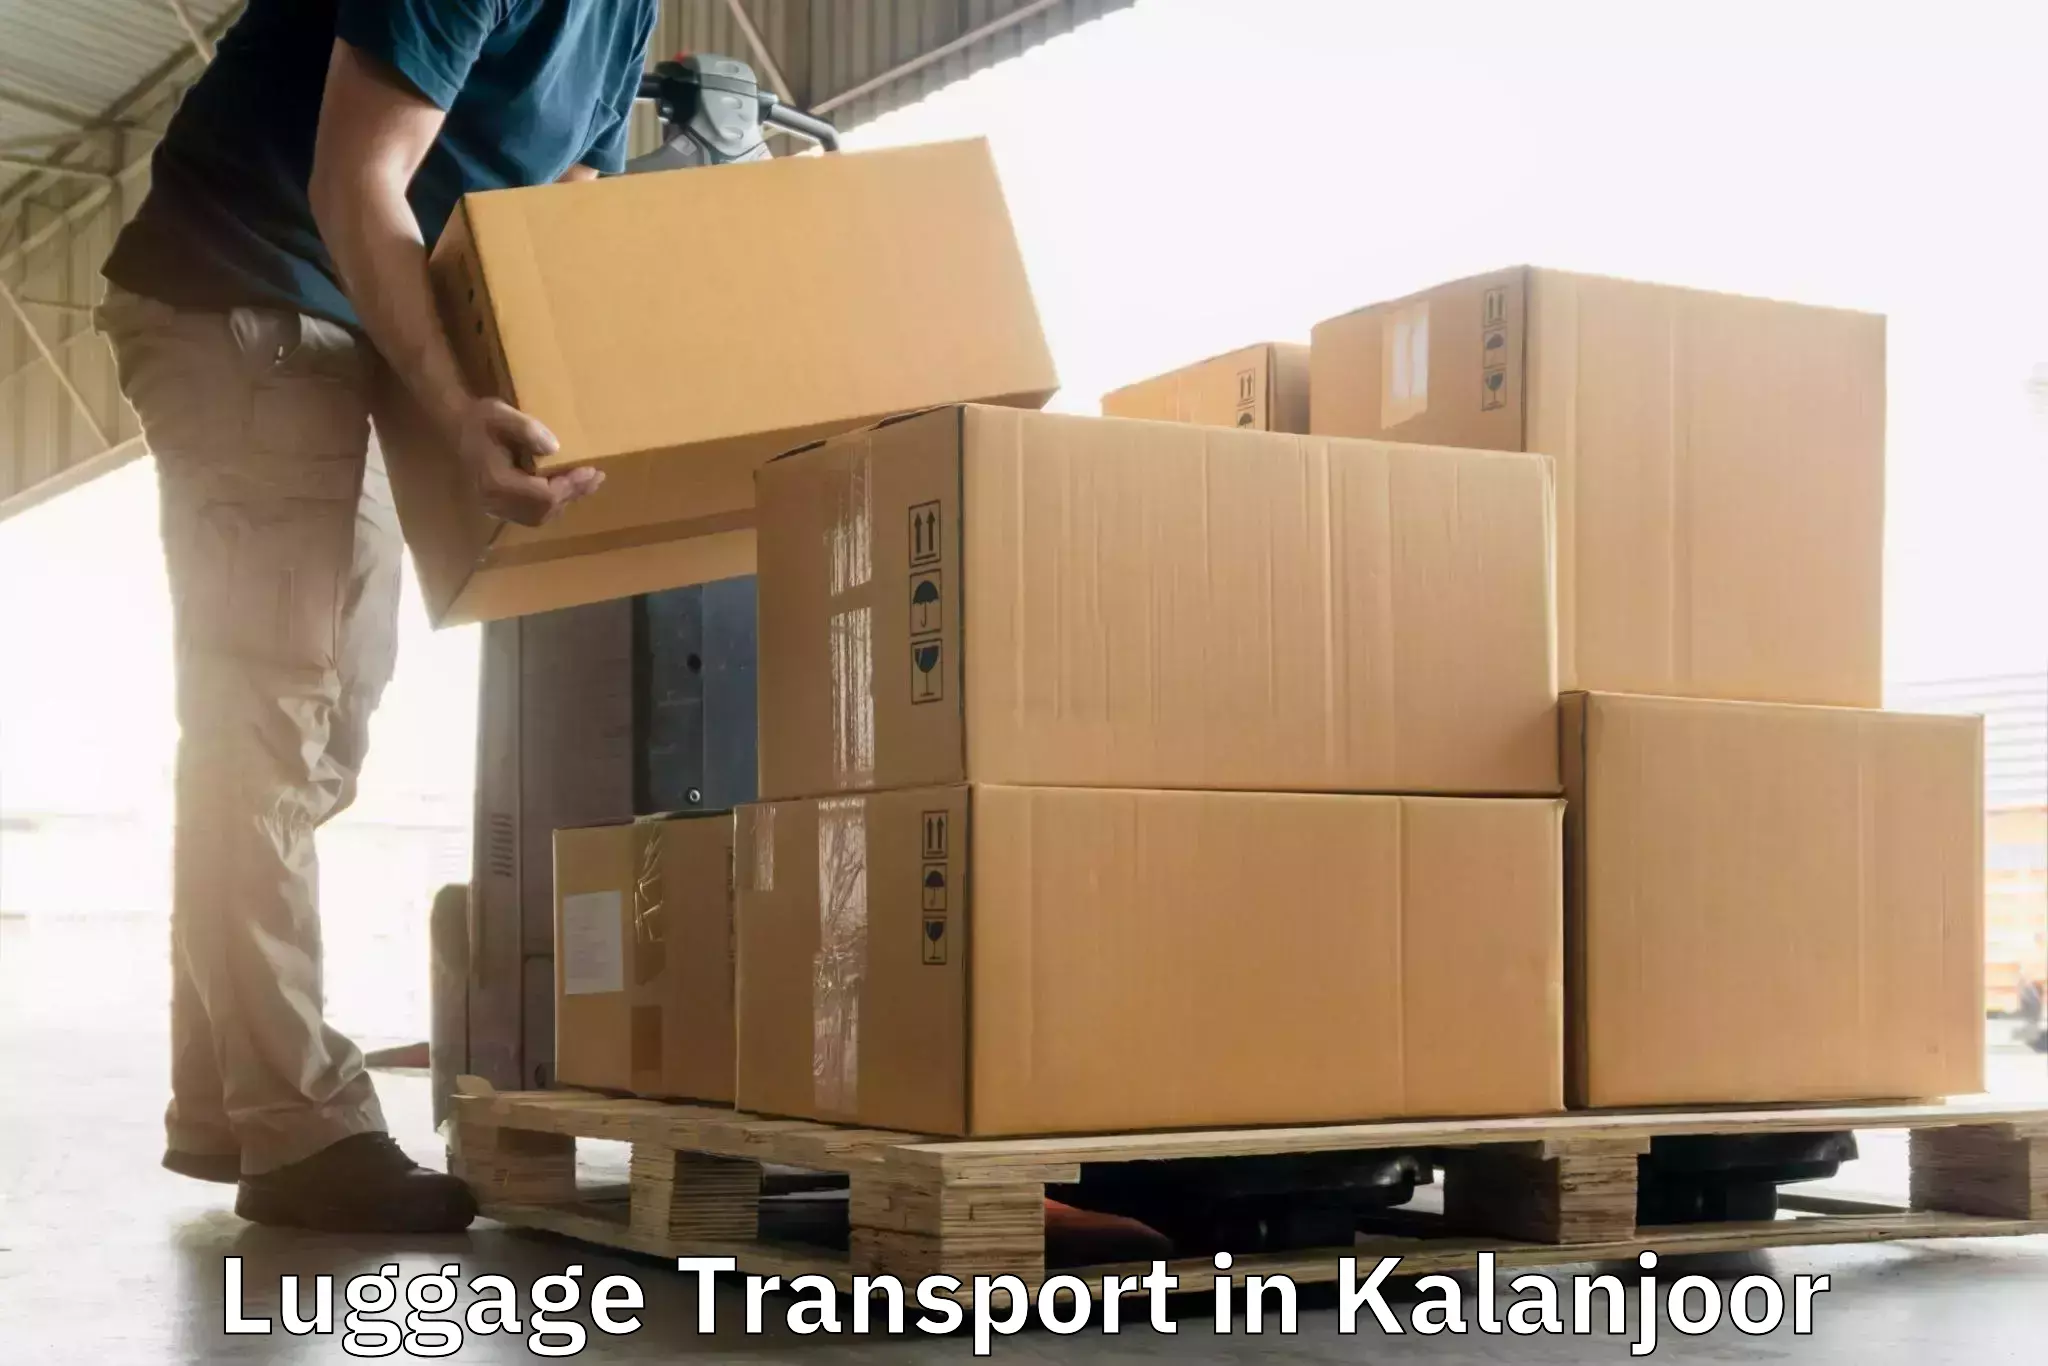 Luggage transfer service in Kalanjoor